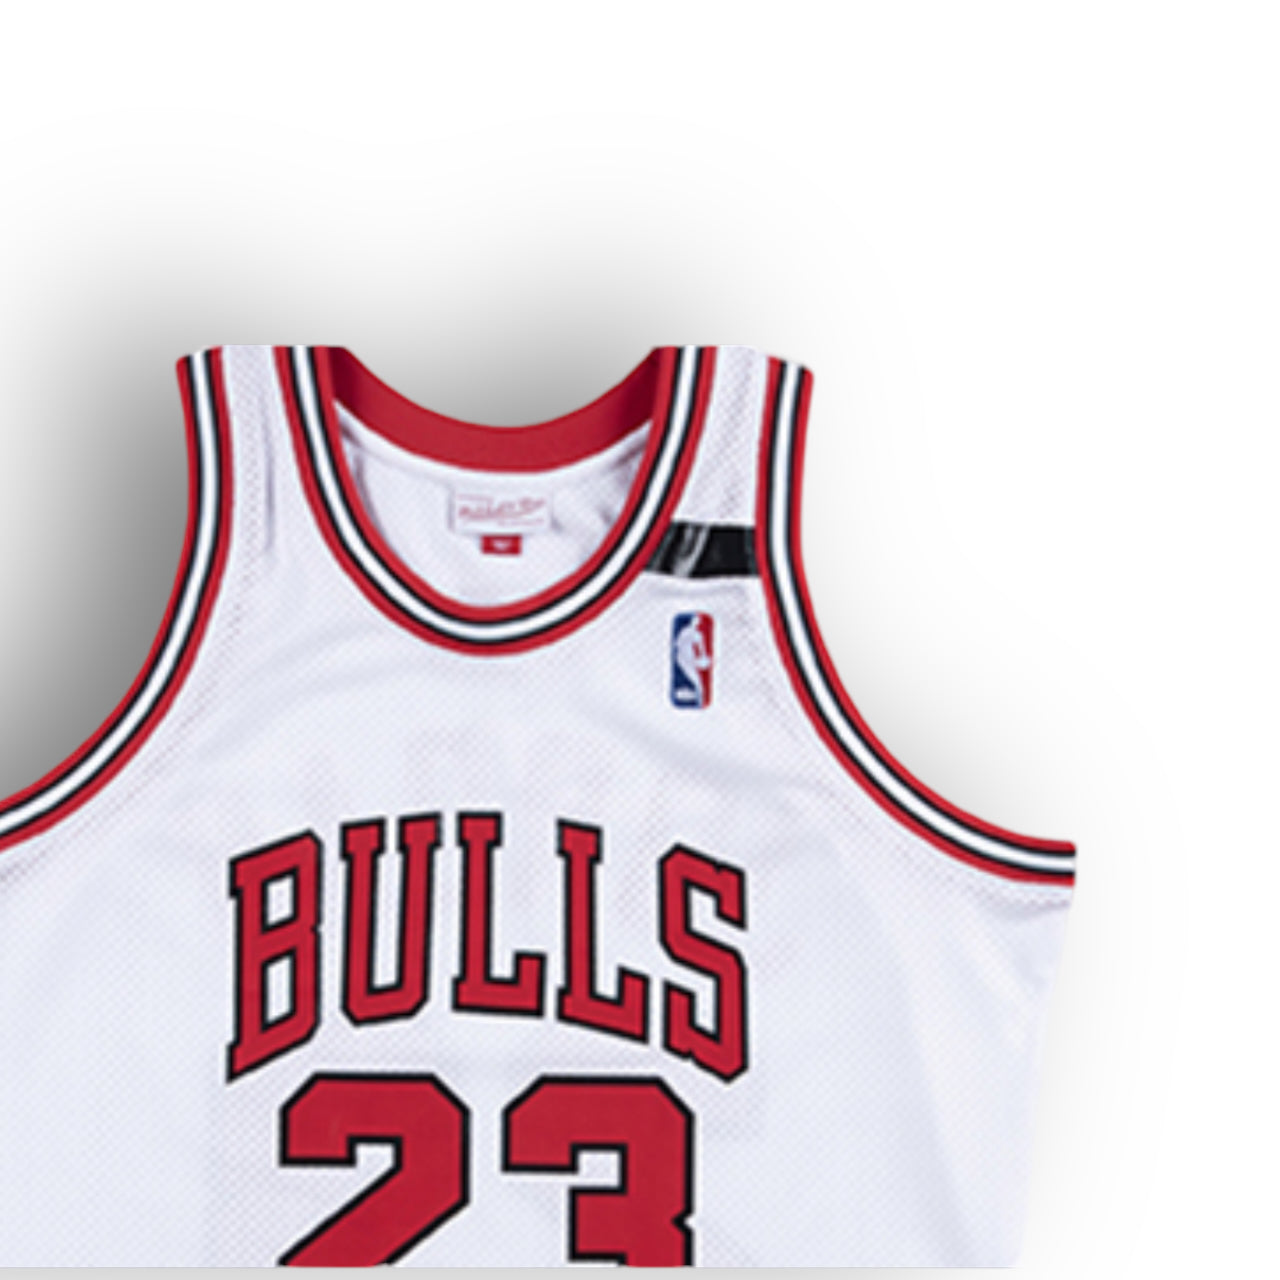 Mitchell & Ness Michael Jordan 91-92 Bulls 23 Home Authentic Jersey - White - Hoop Jersey Store